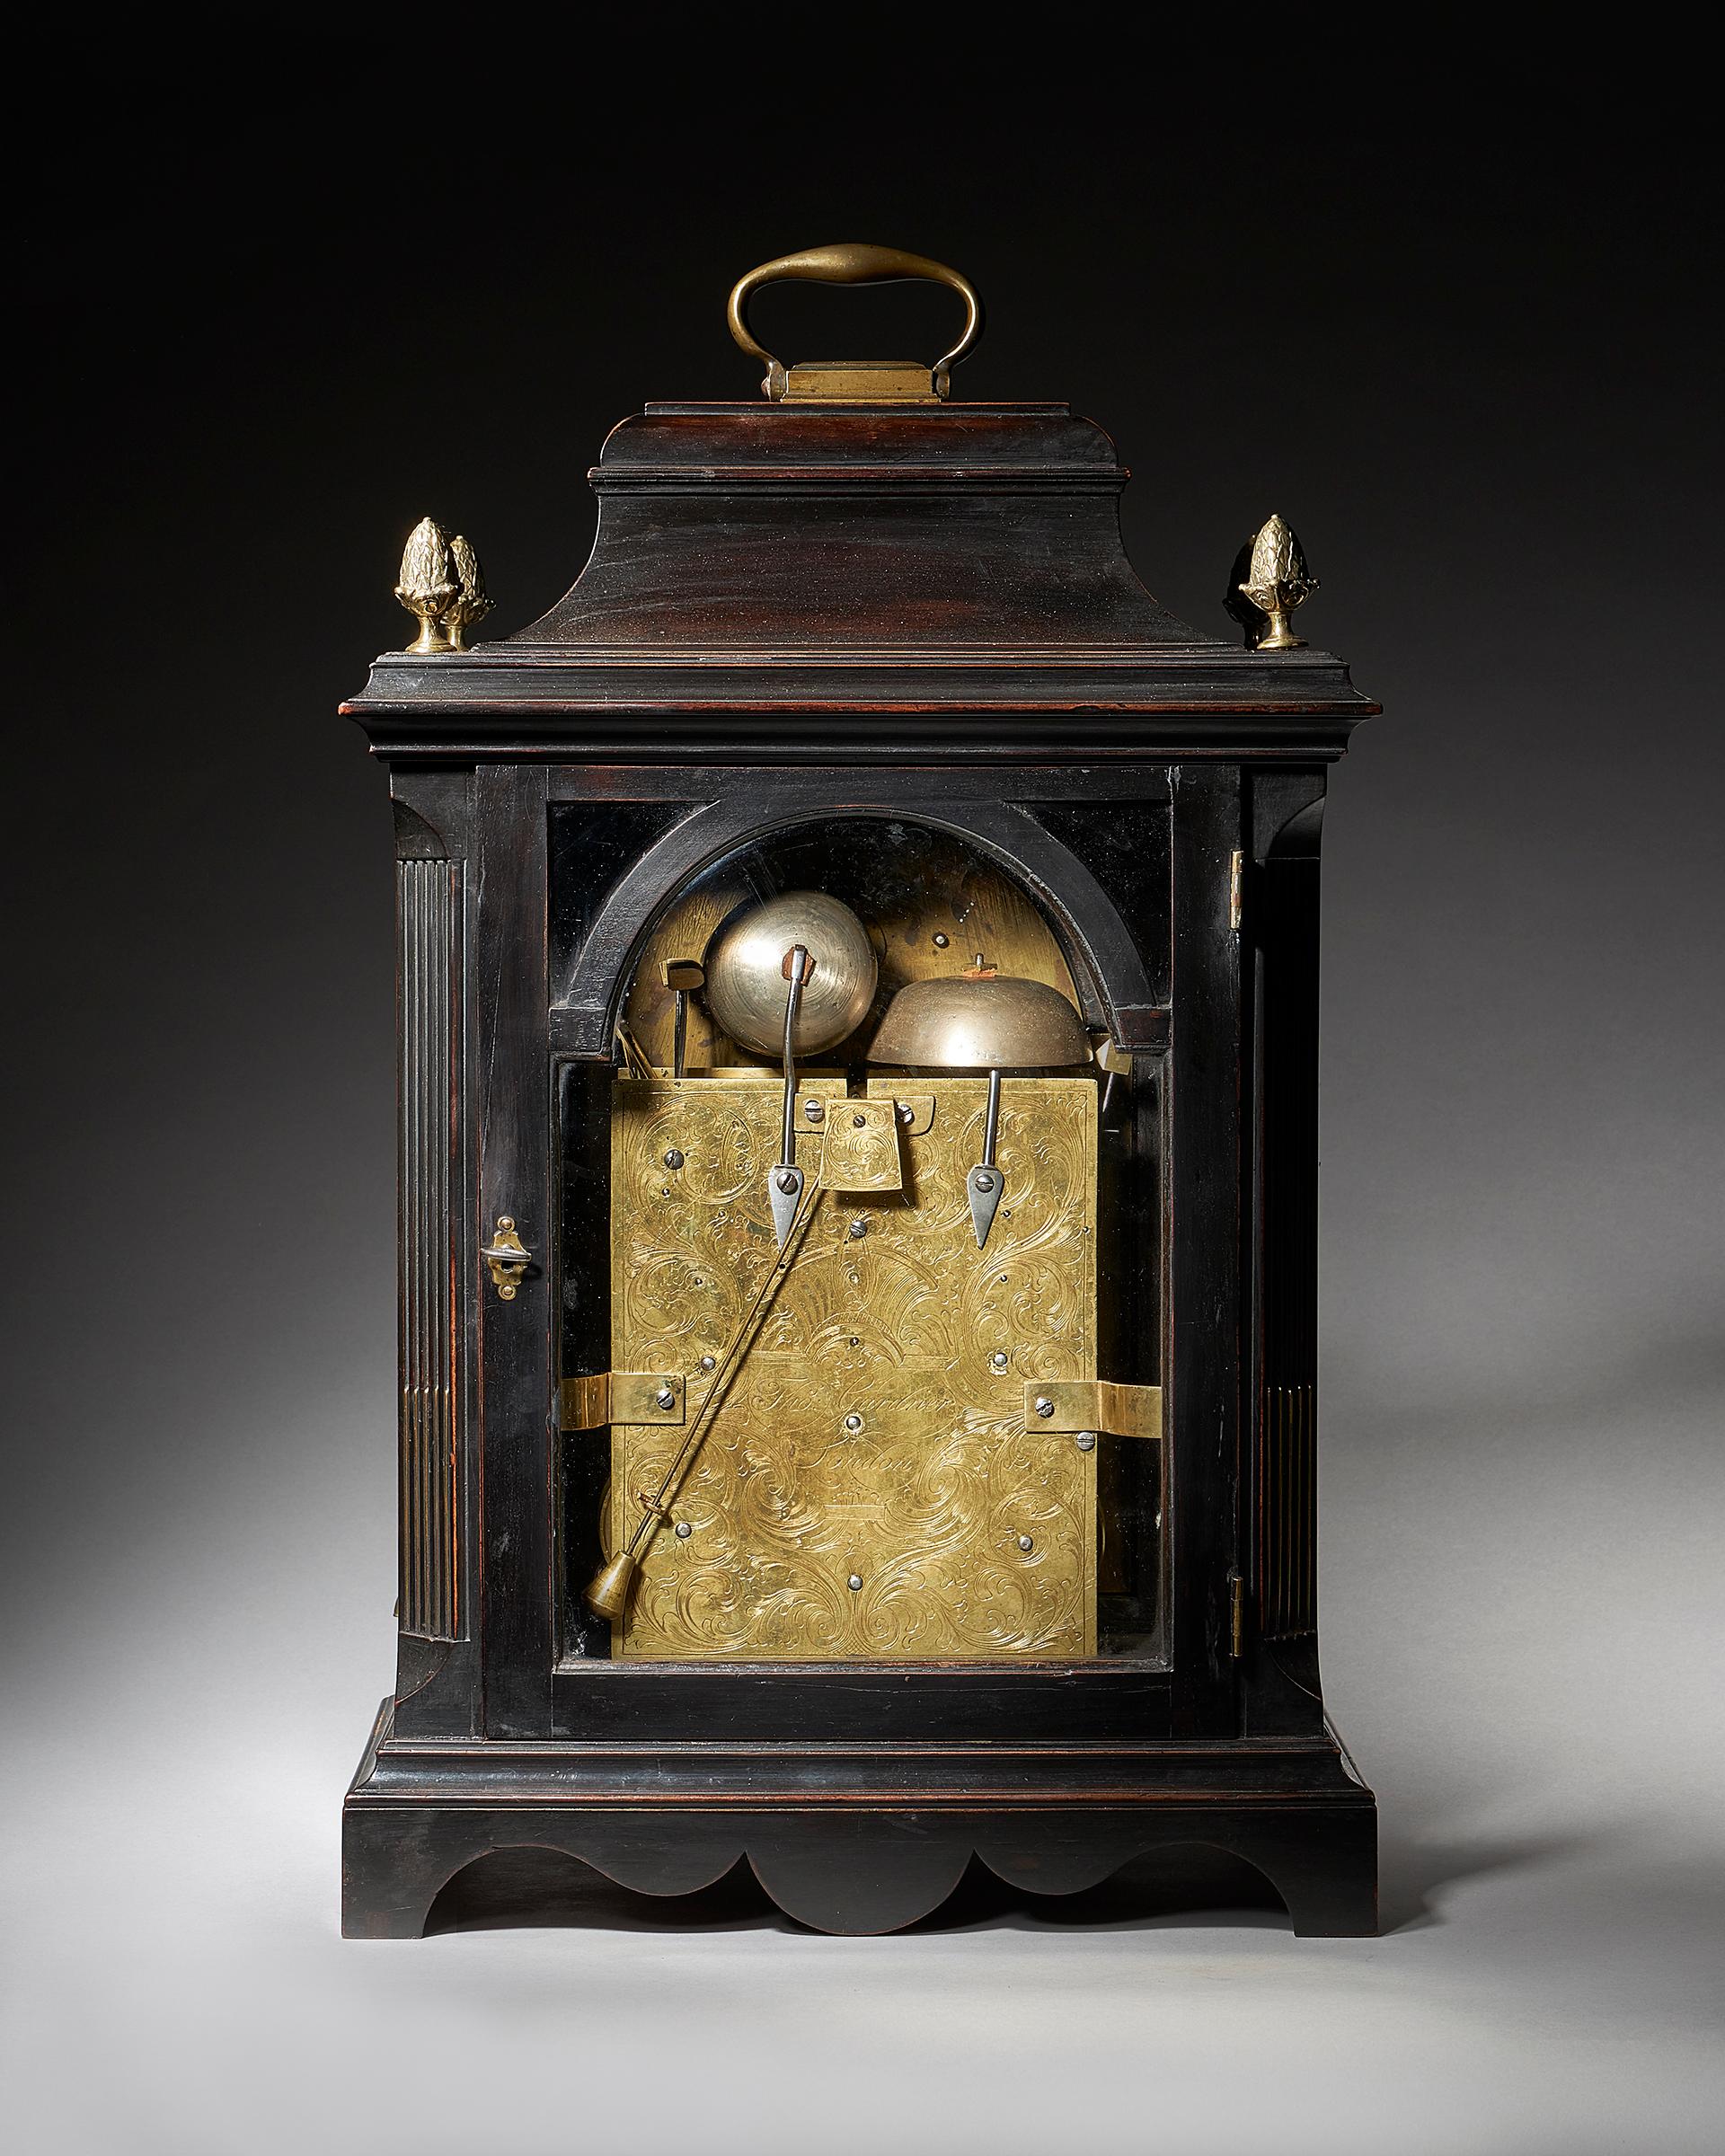 Extremely Rare George III 18th Century Quarter-Striking Bracket Clock, Signed 1